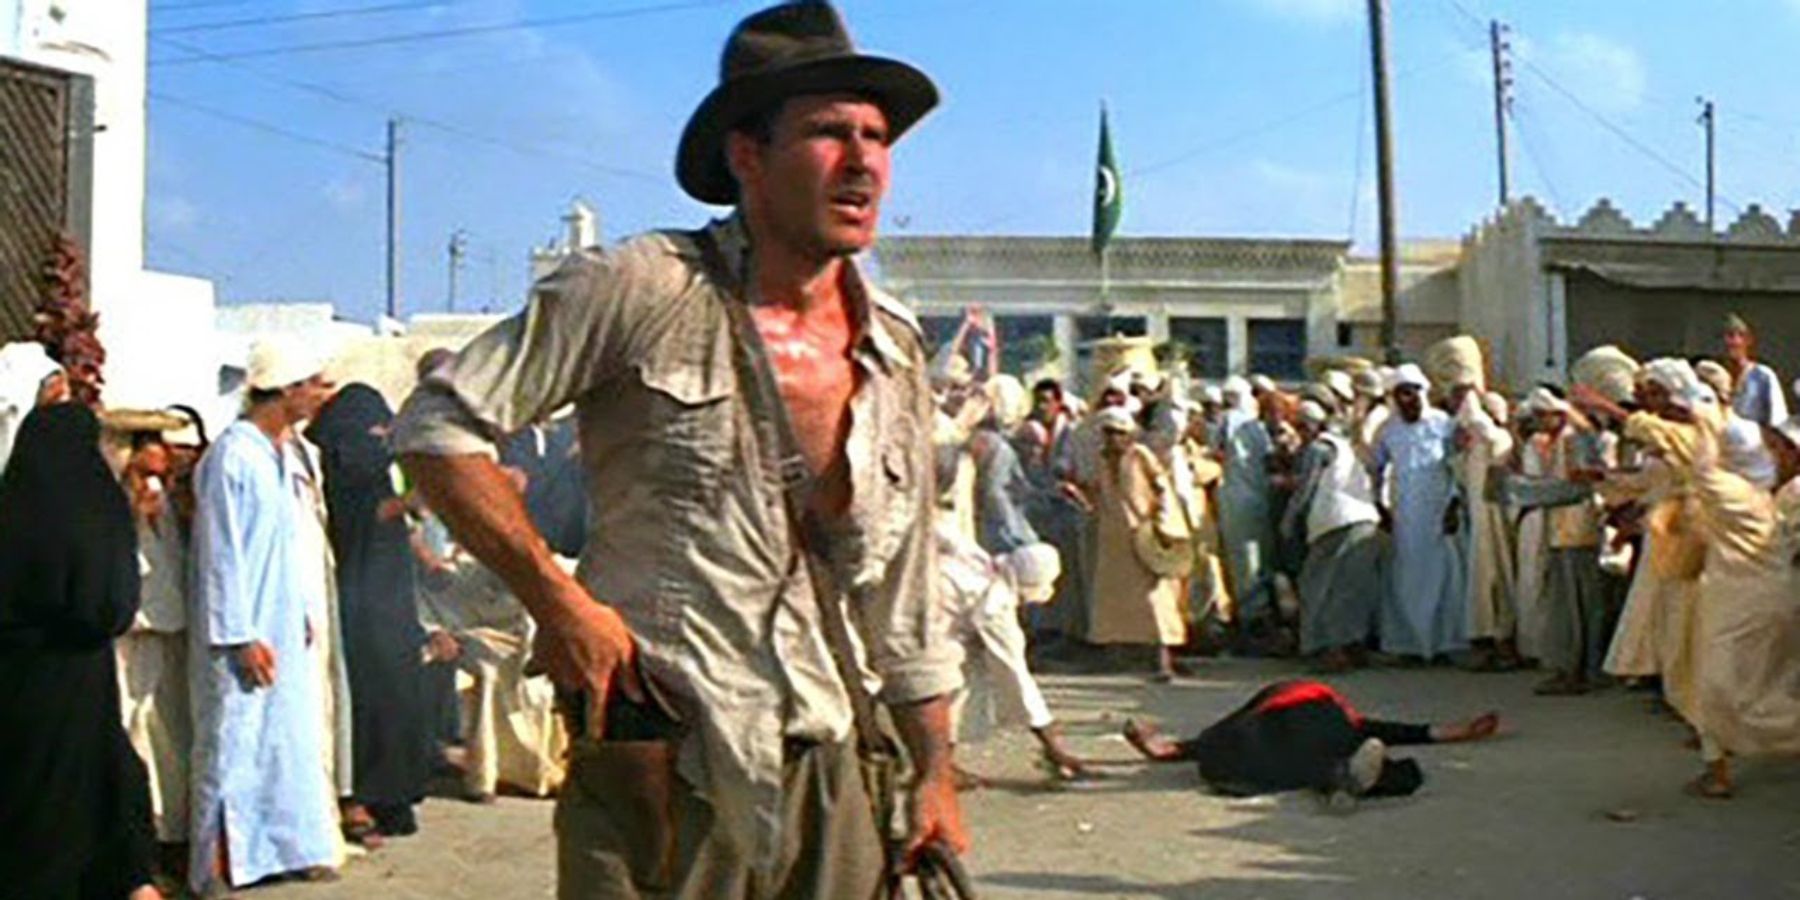 Indiana Jones holds his pistol in Indiana Jones: Raiders of the Lost Ark